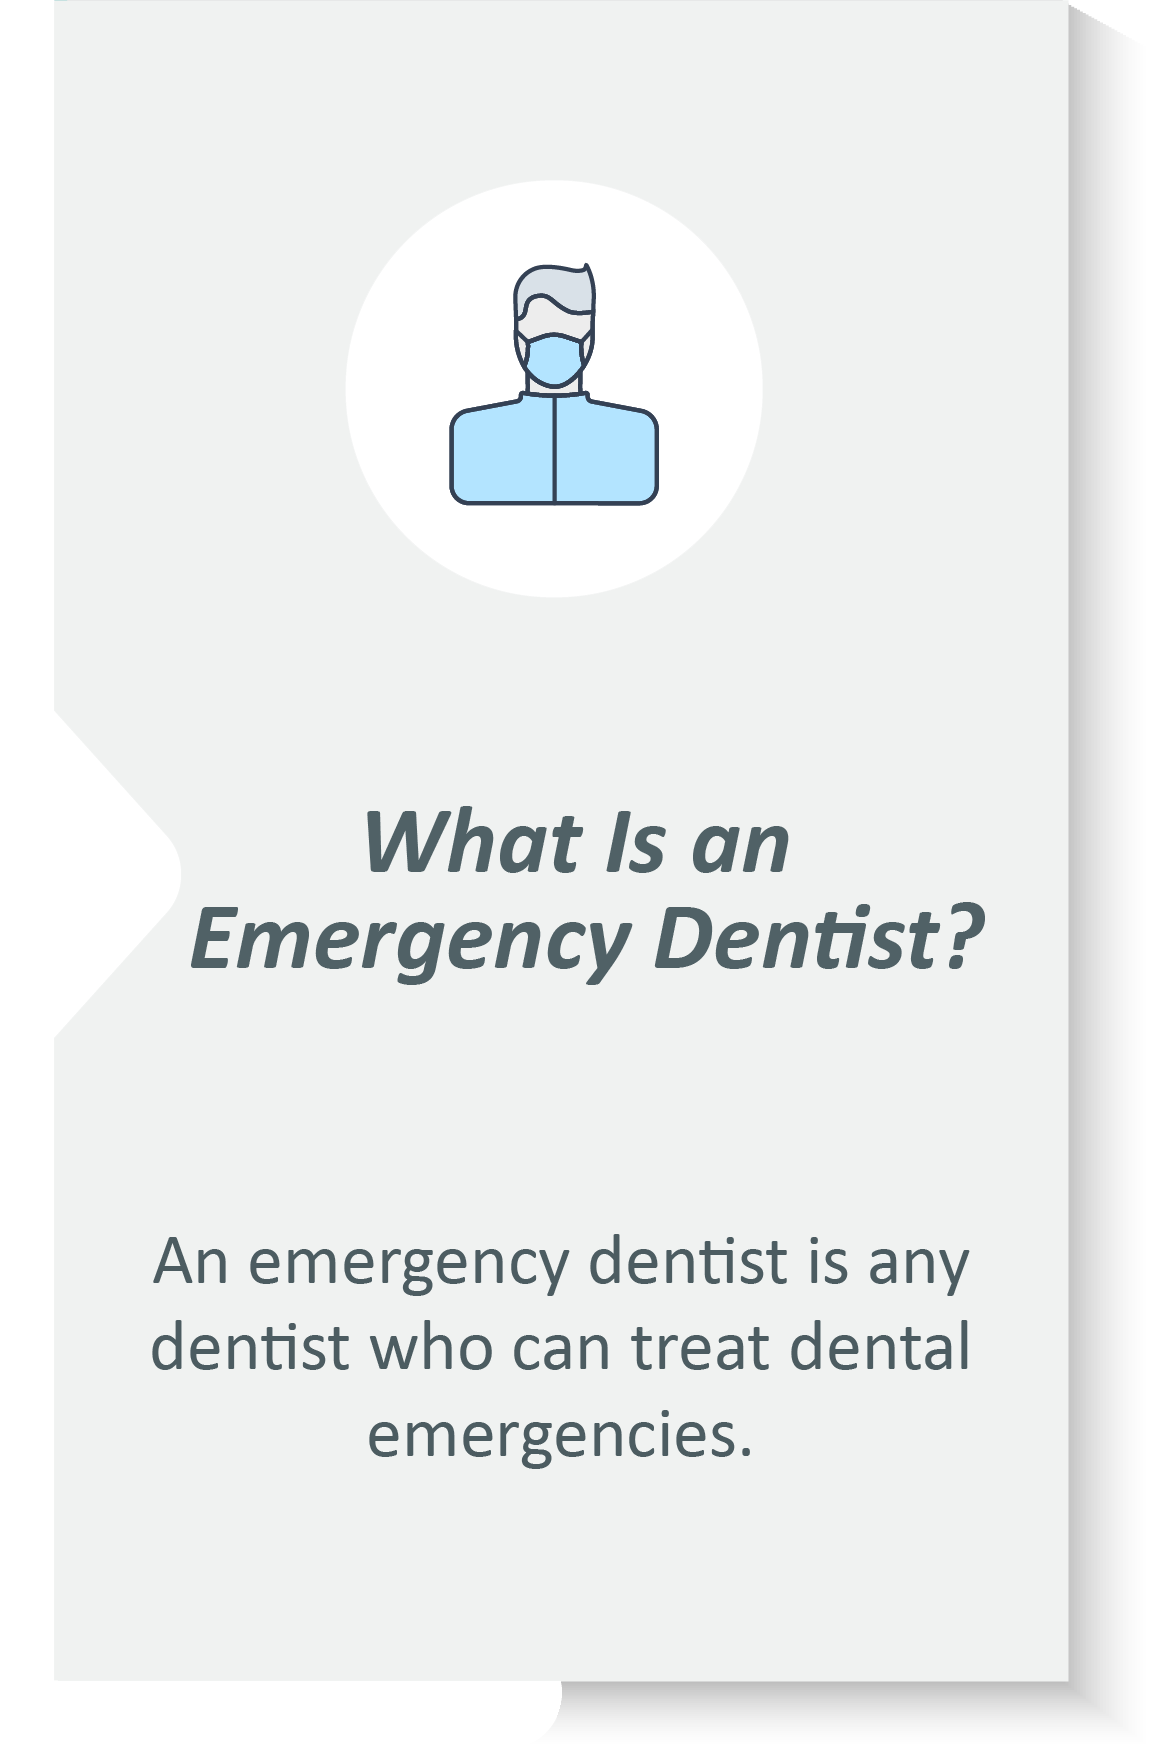 Emergency dentist infographic: An emergency dentist is any dentist who can treat dental emergencies.